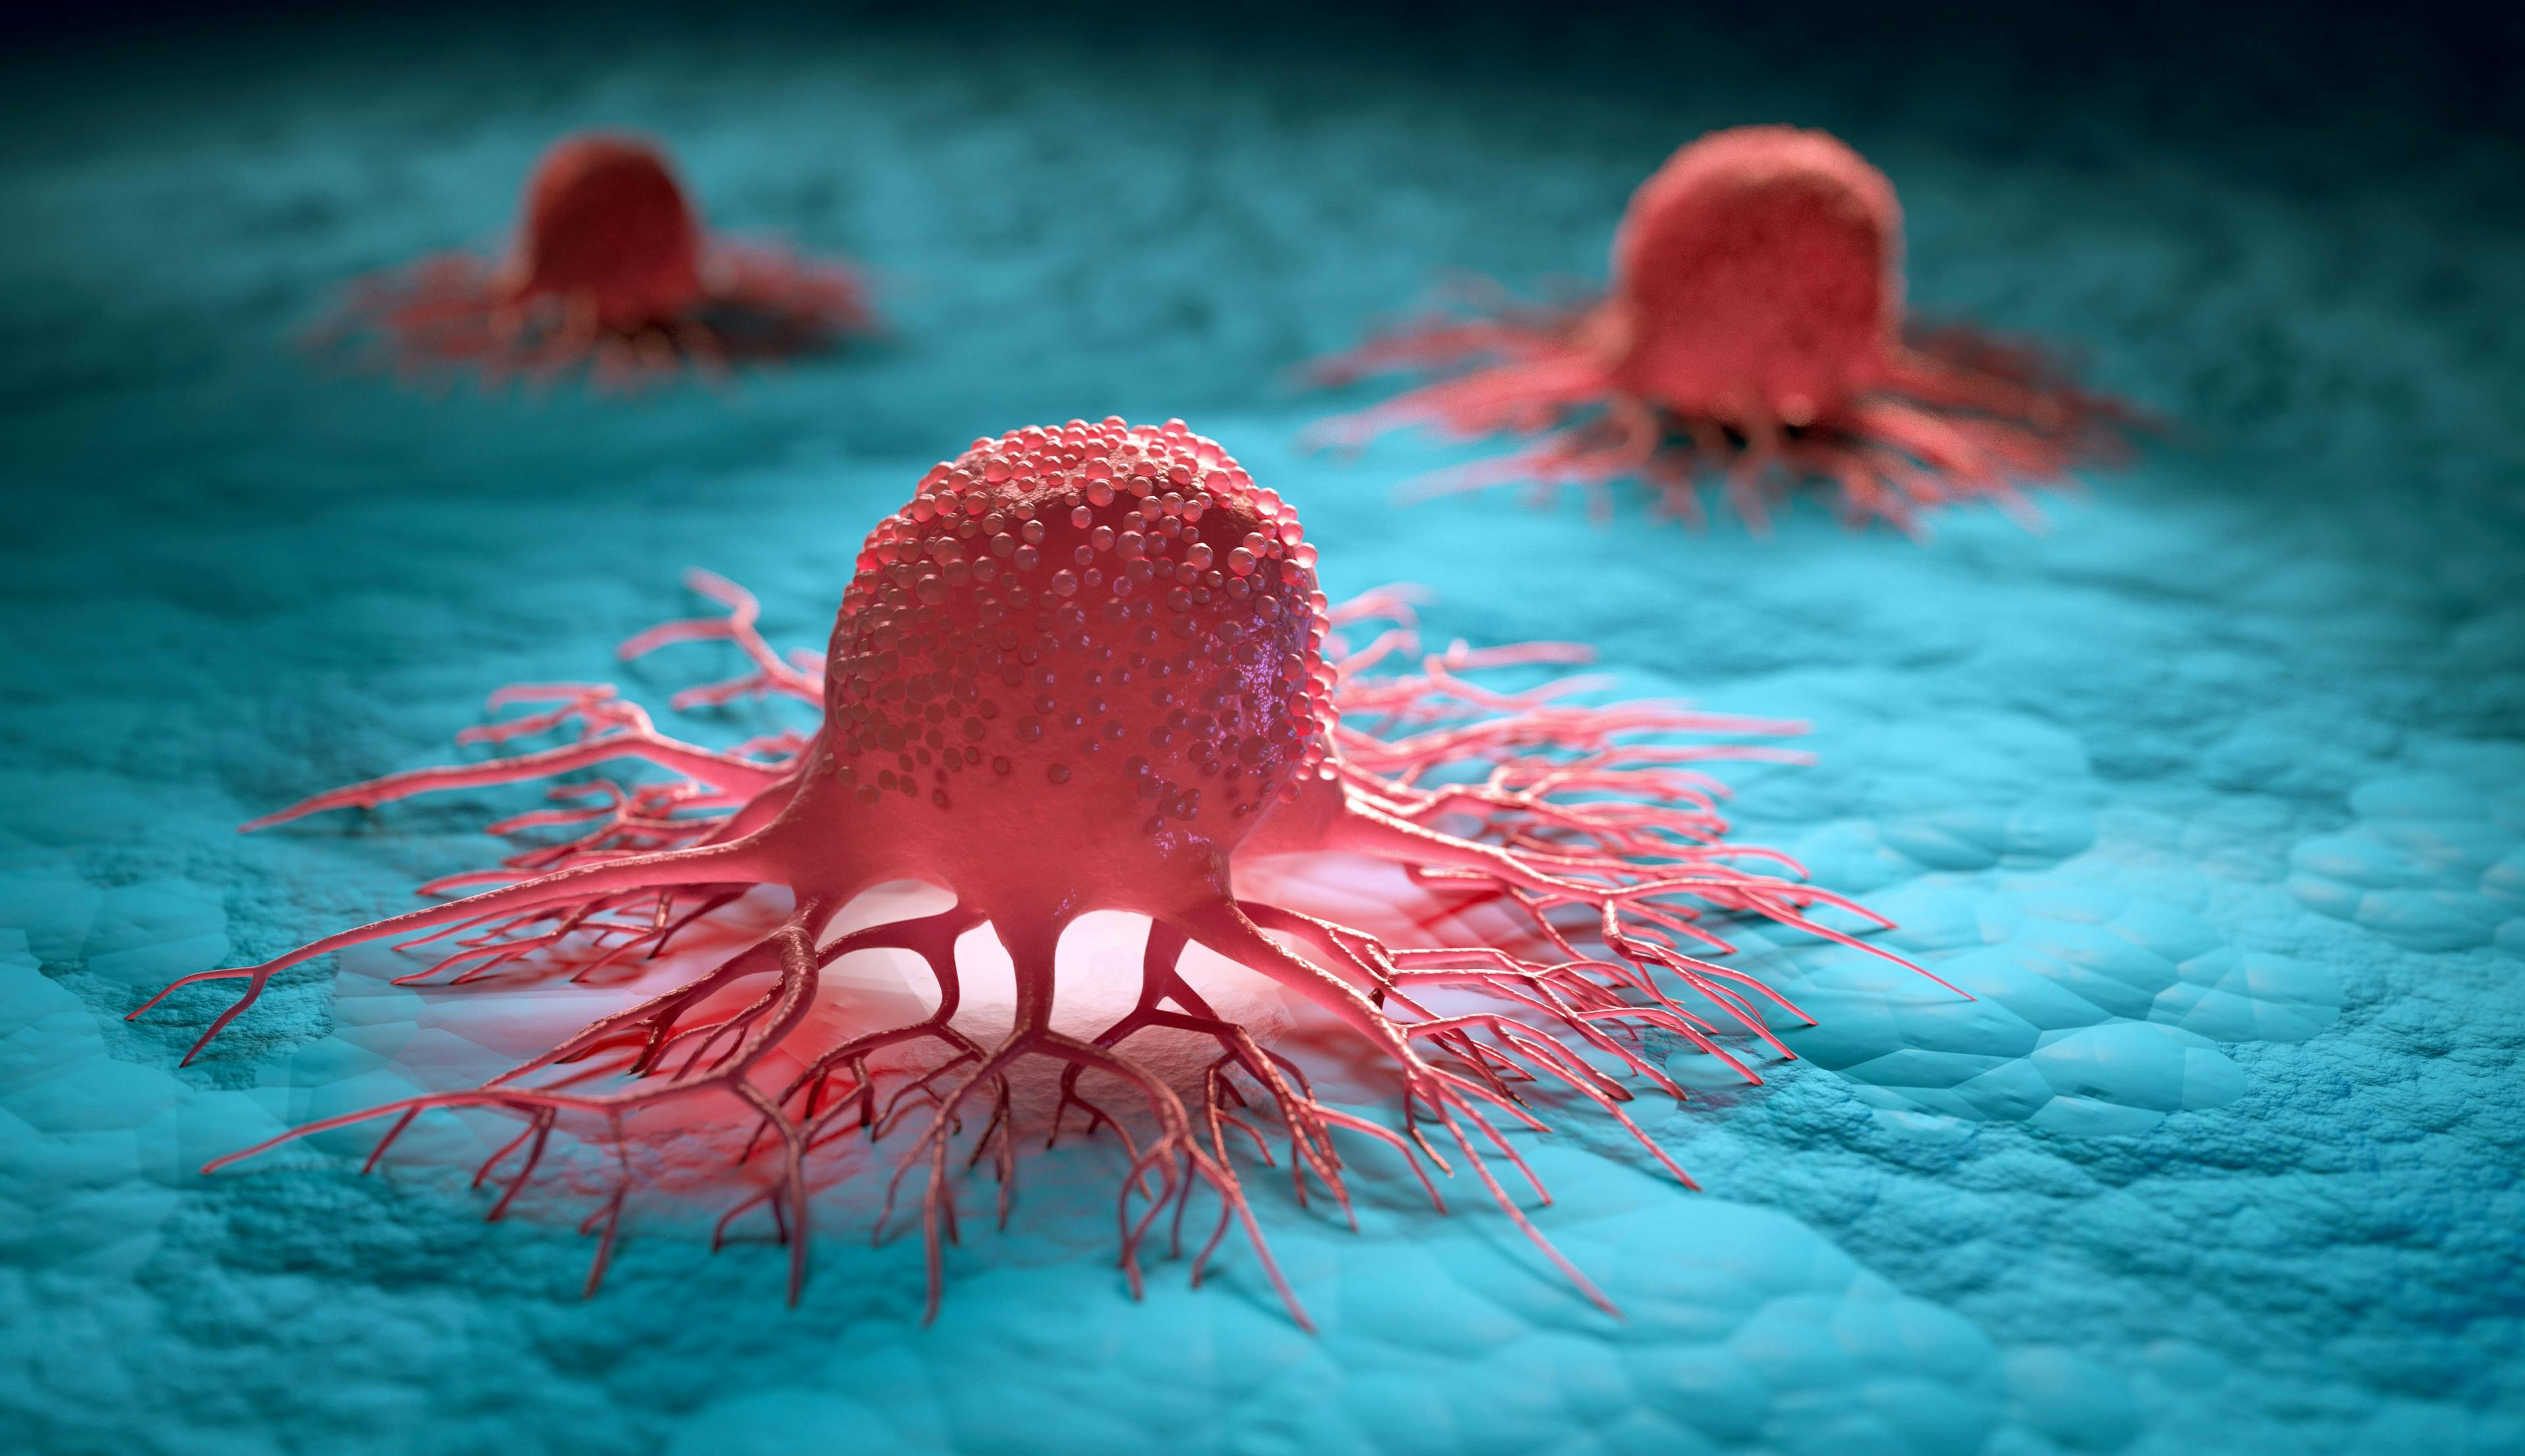 Cancer cells | Image credit: © peterschreiber.media - Adobe Stock